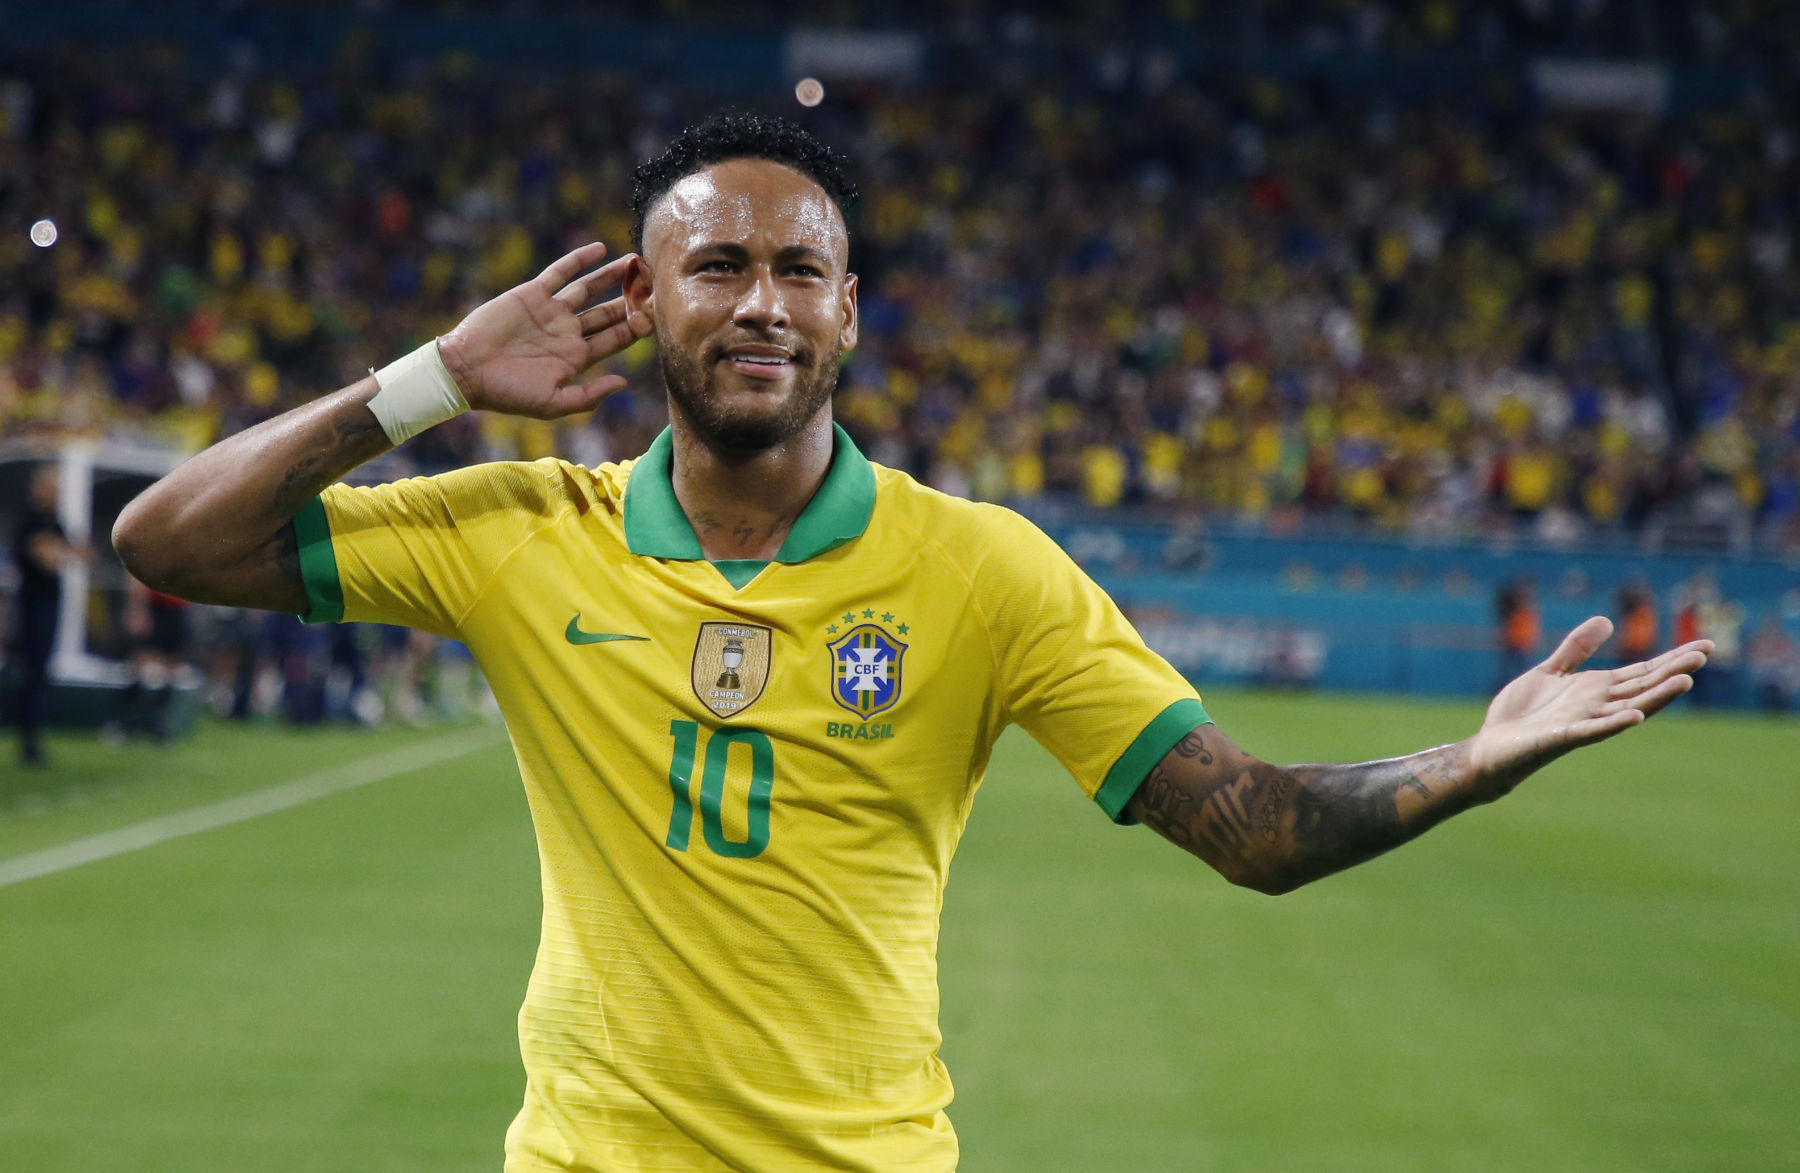 neymar brazil jersey 2019